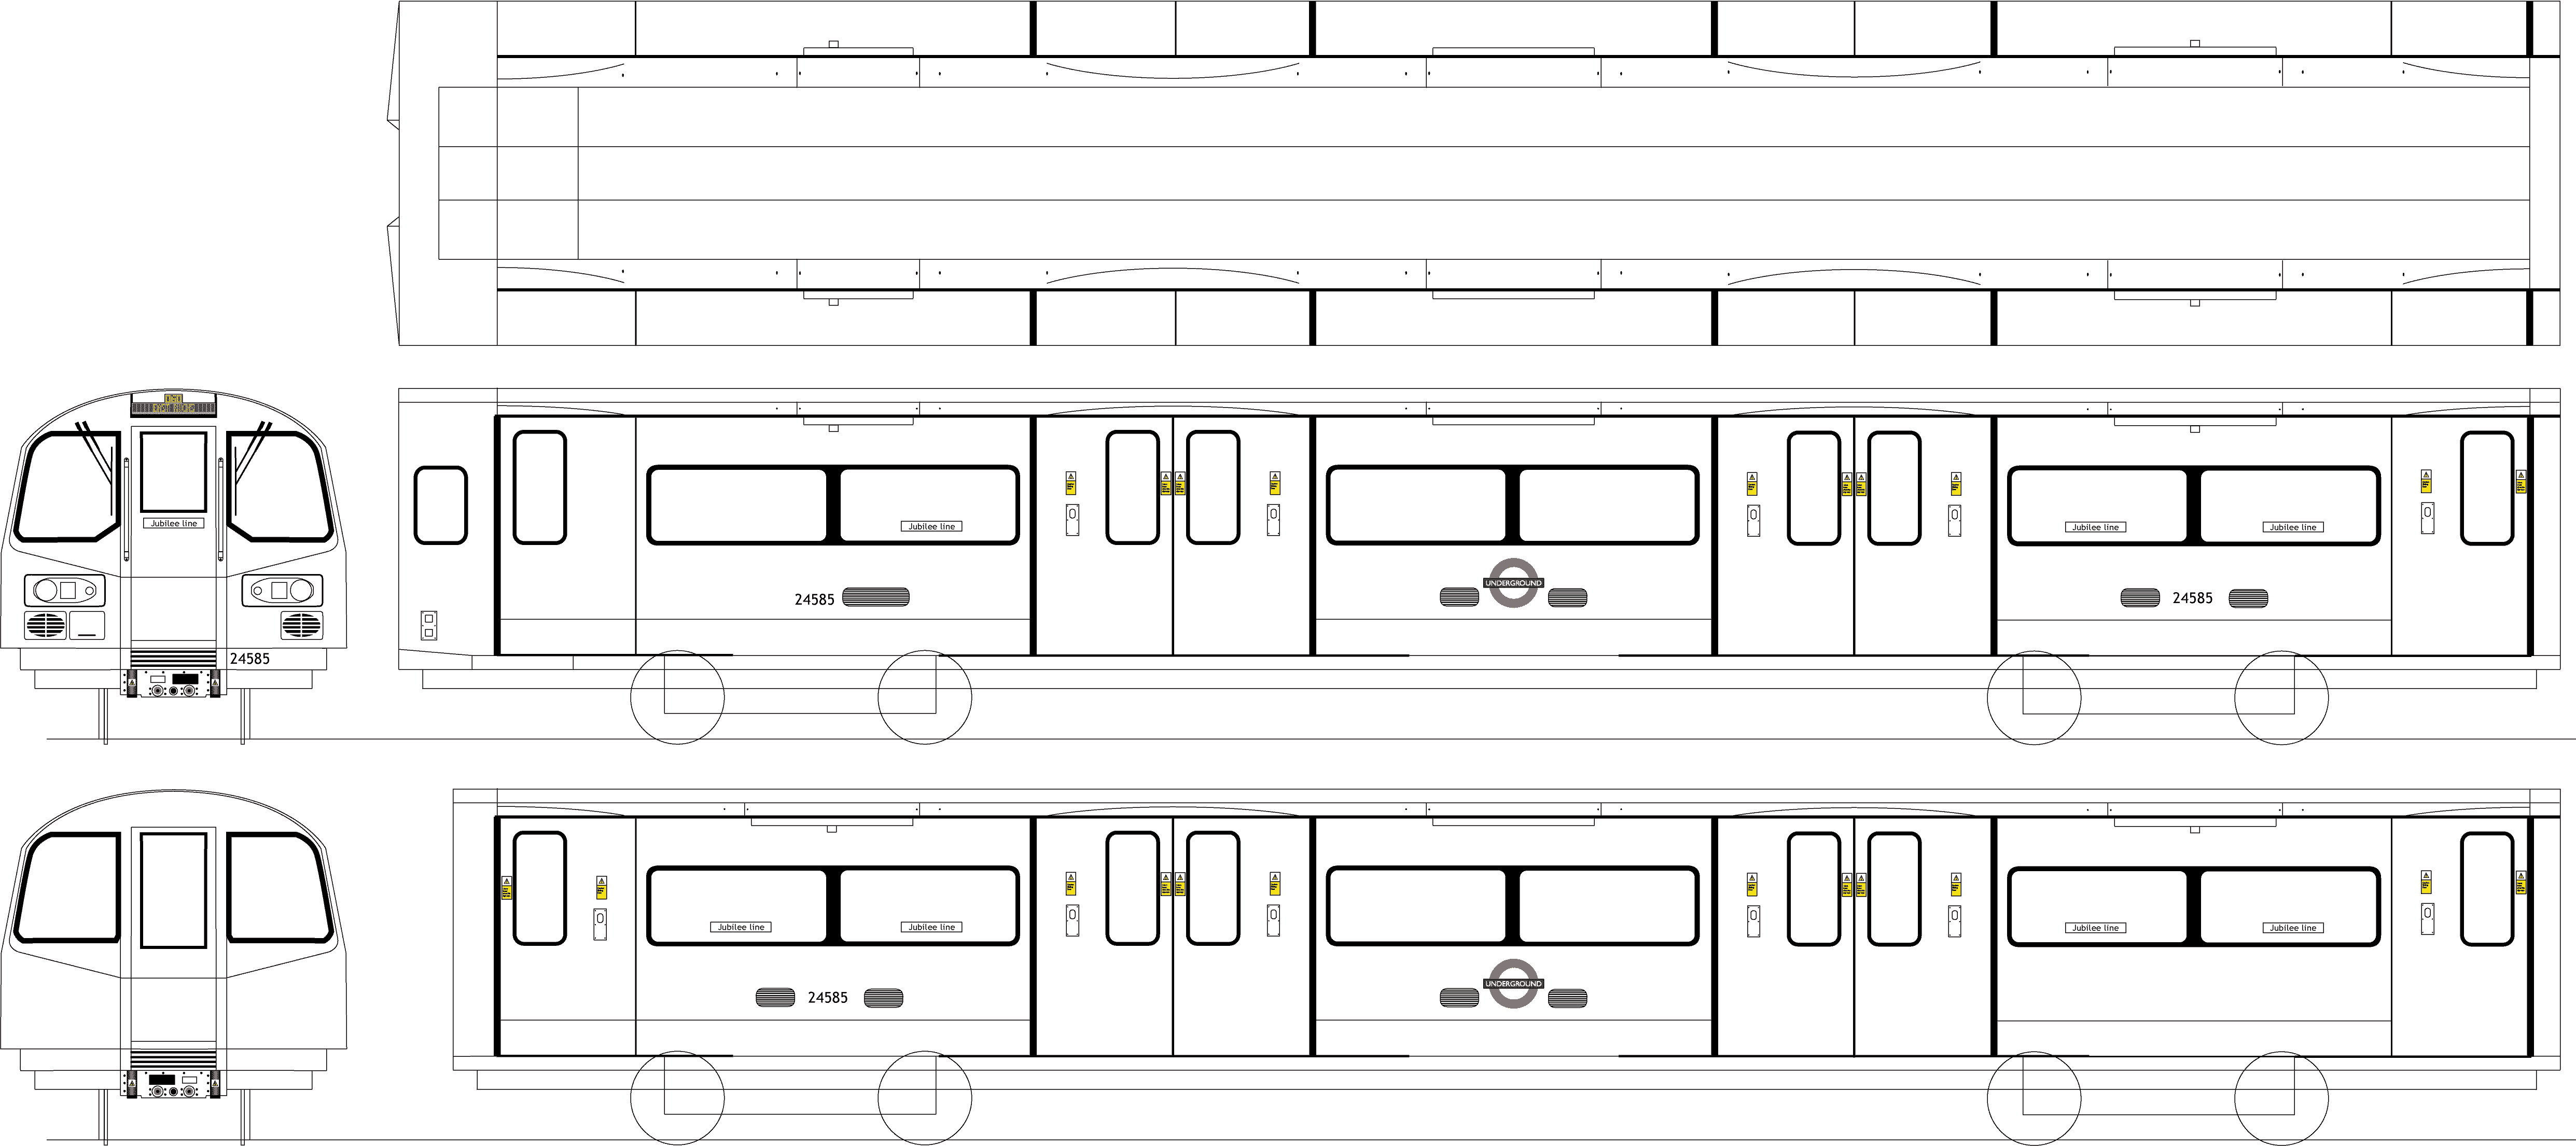 London Underground Train blueprint